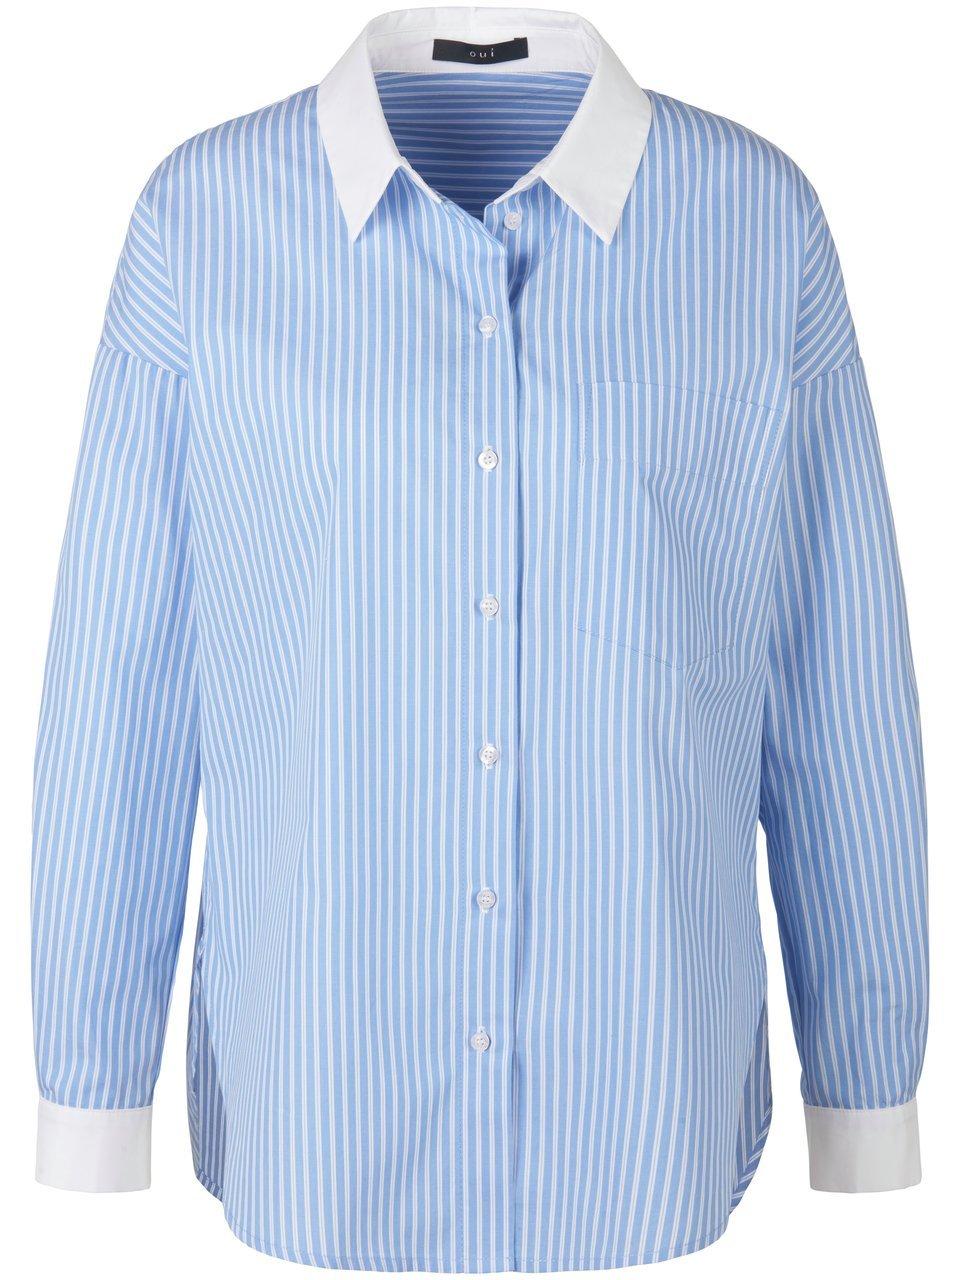 Lange blouse 100% katoen Van oui blauw